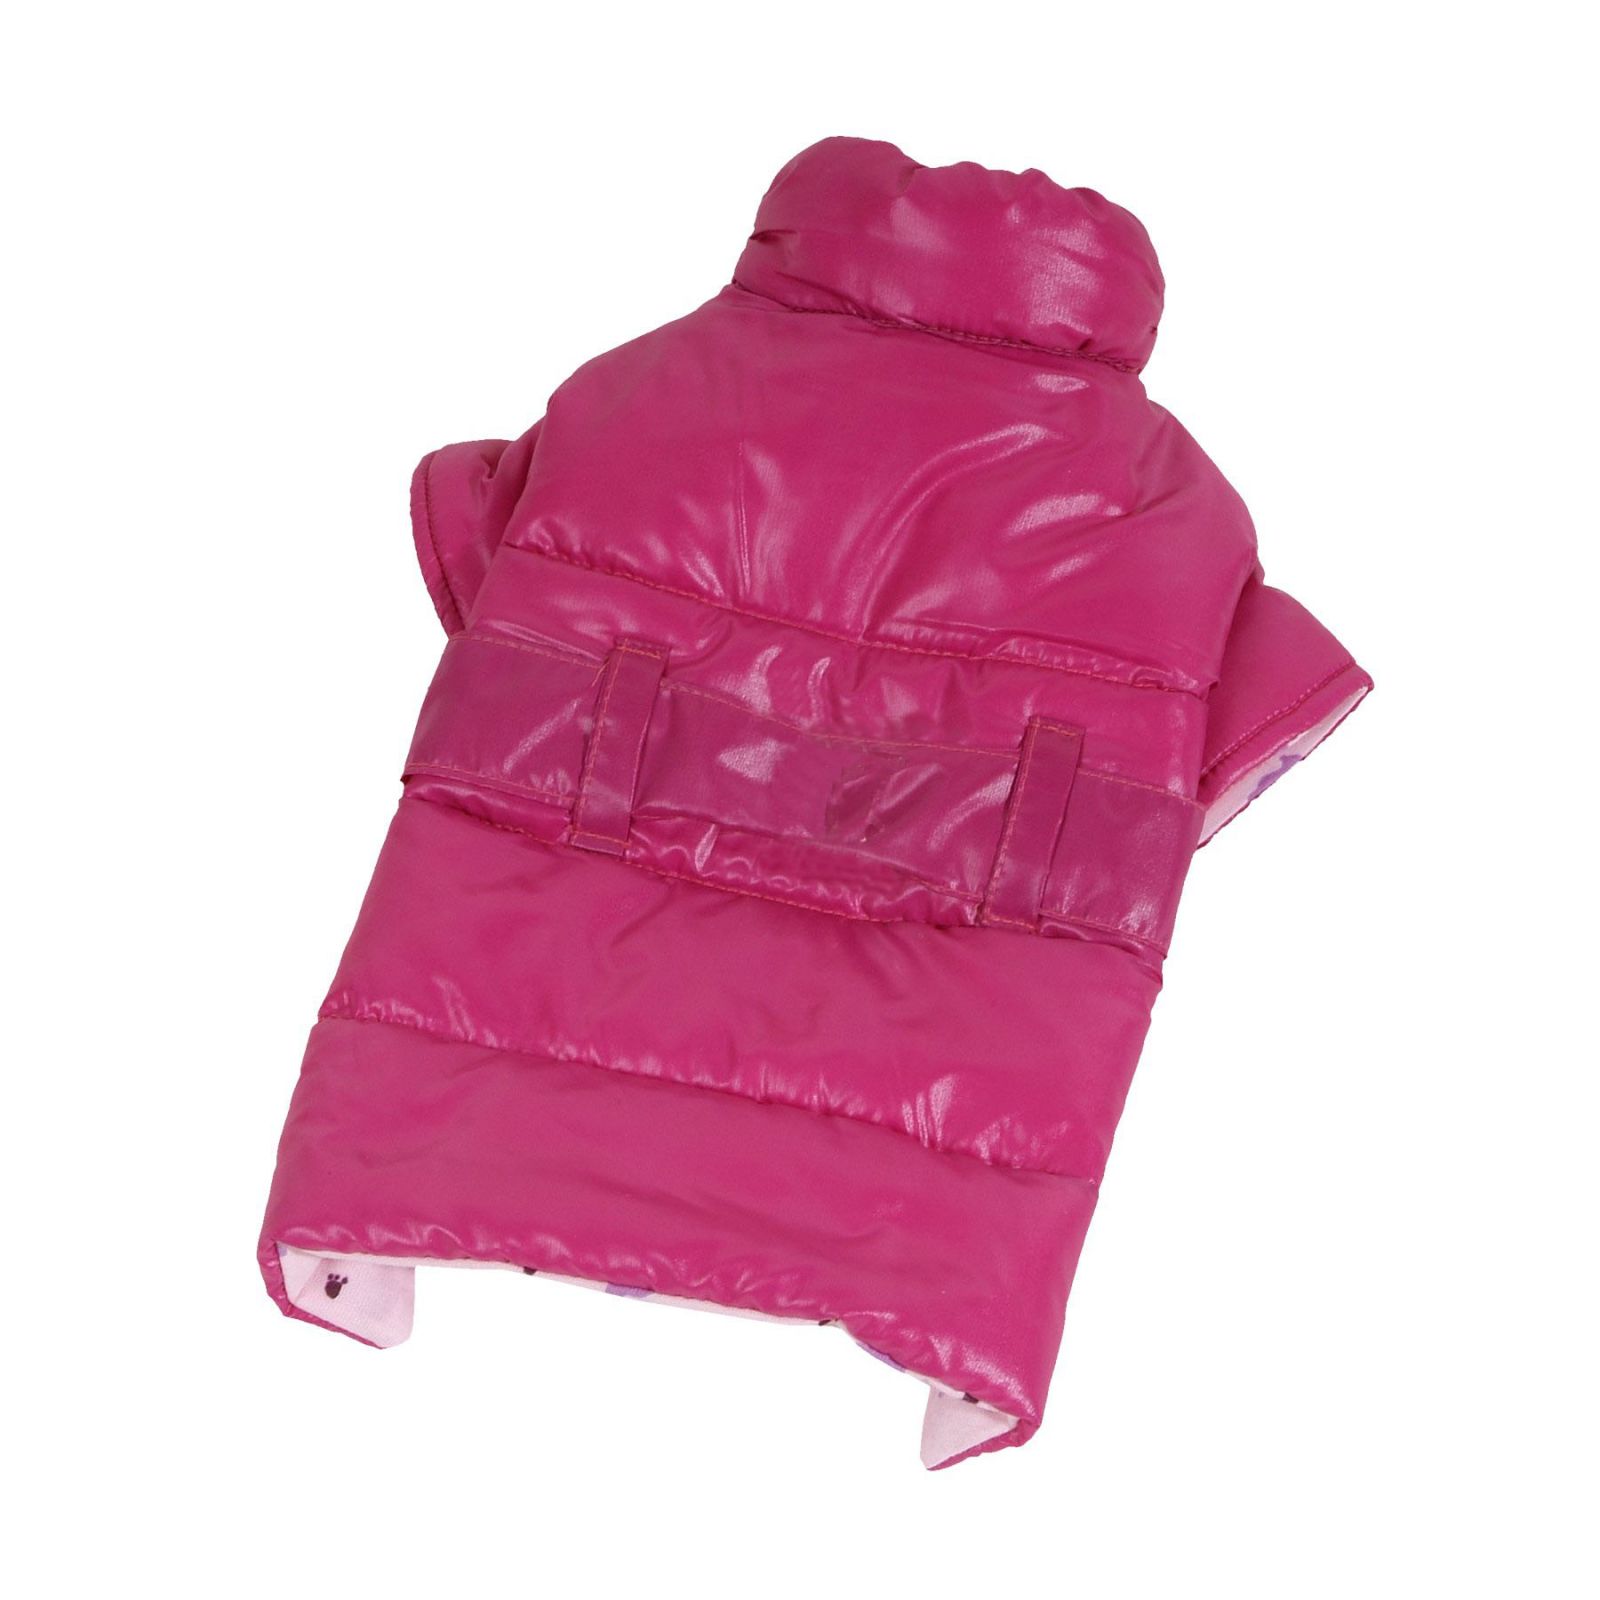 Kabátek De Luxe - růžová (doprodej skladových zásob) S I love pets